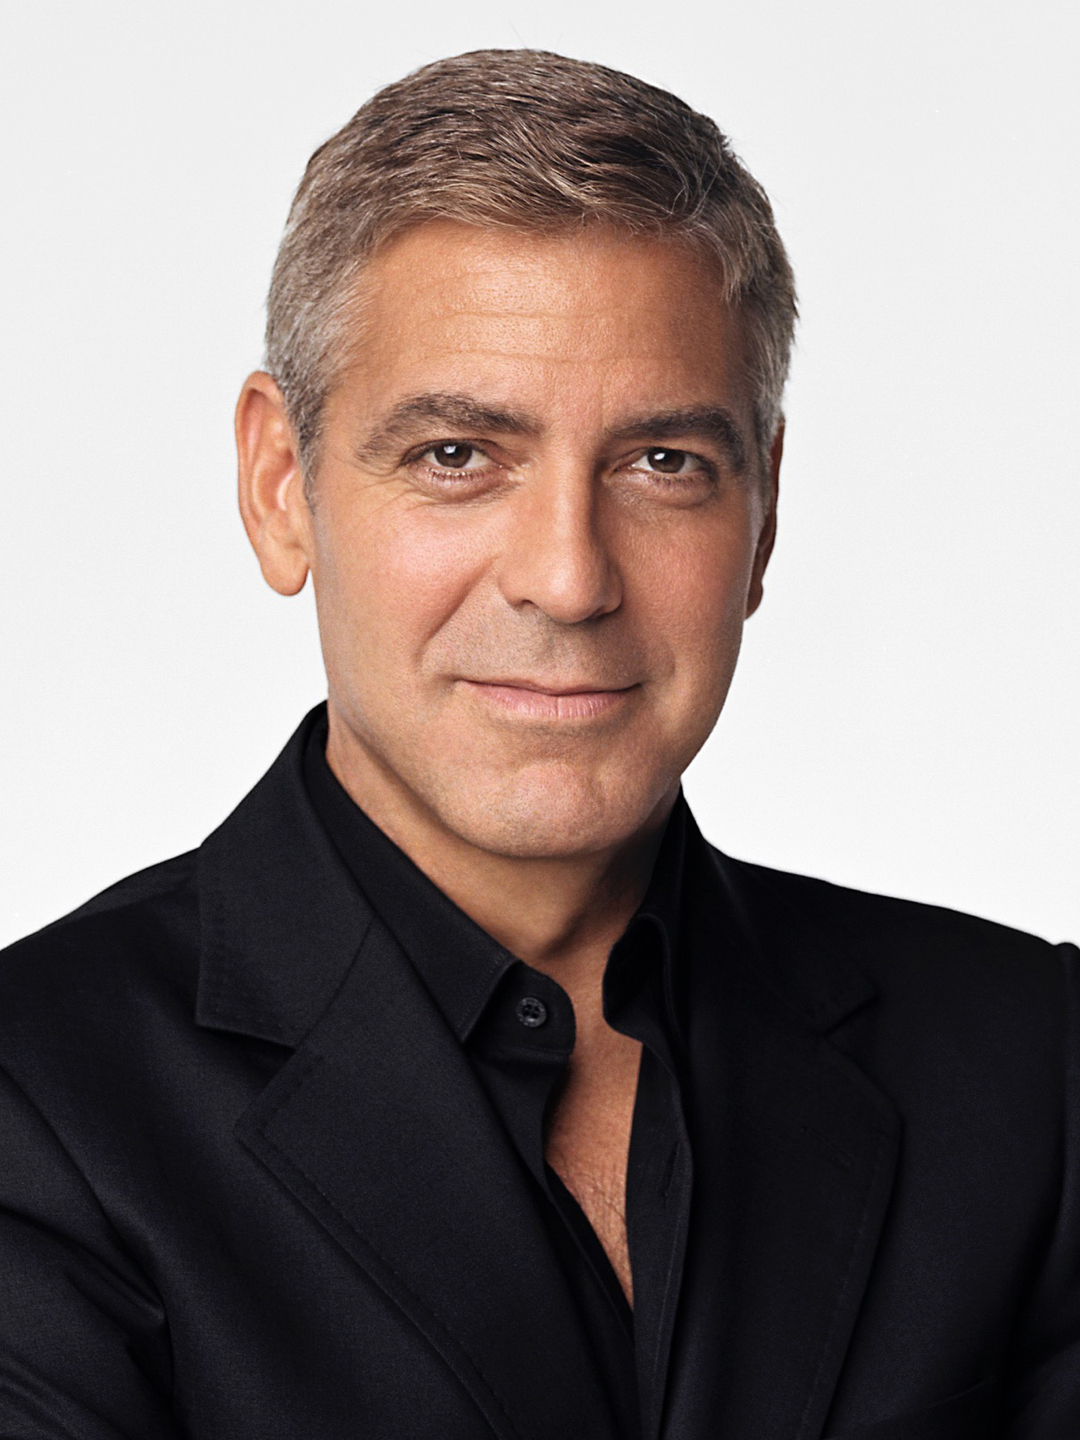 George Clooney bio